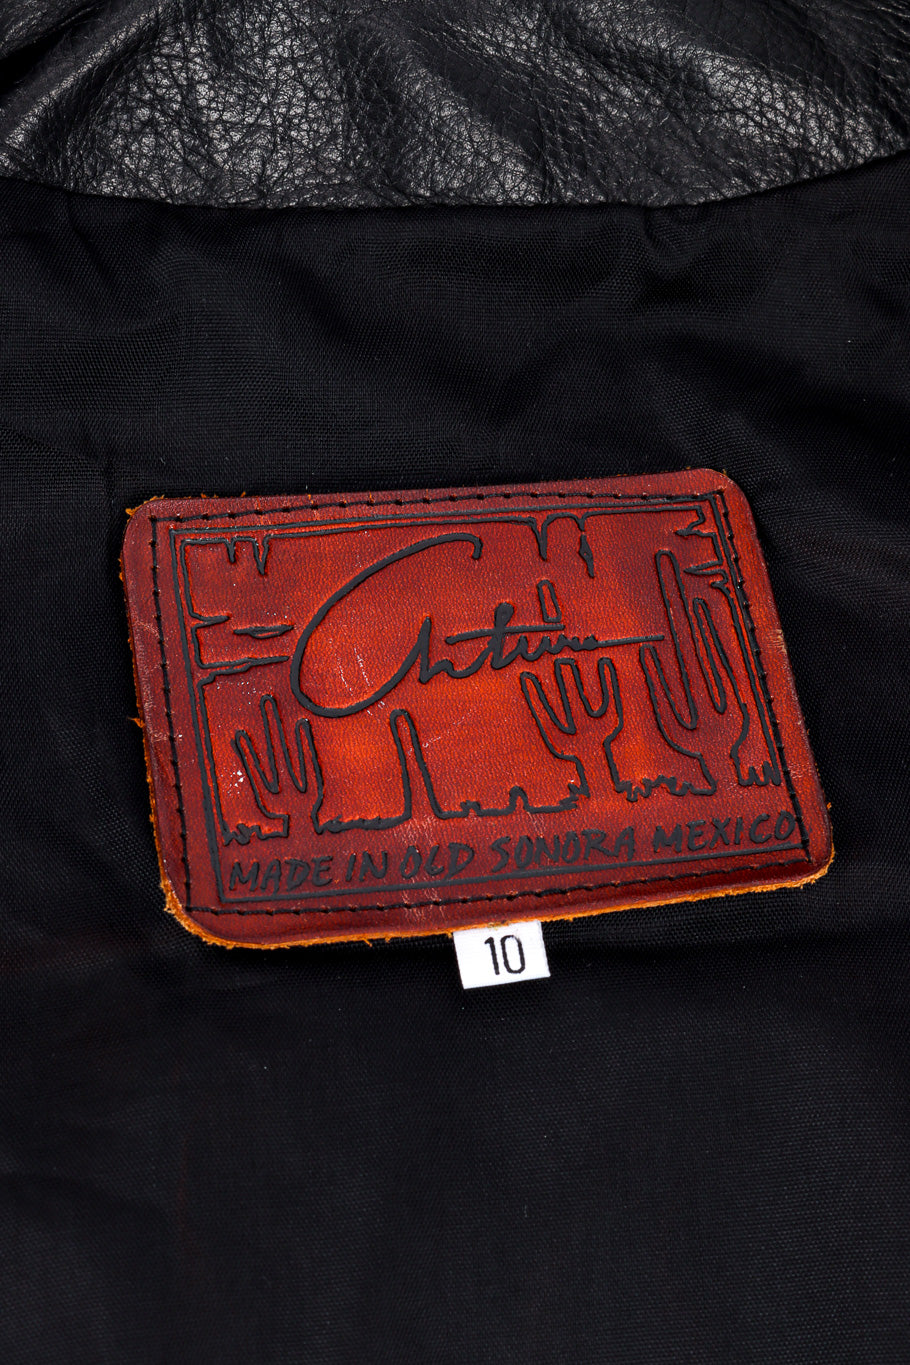 Vintage Arturo Beaded Leather Fringe Jacket signature label closeup @recessla